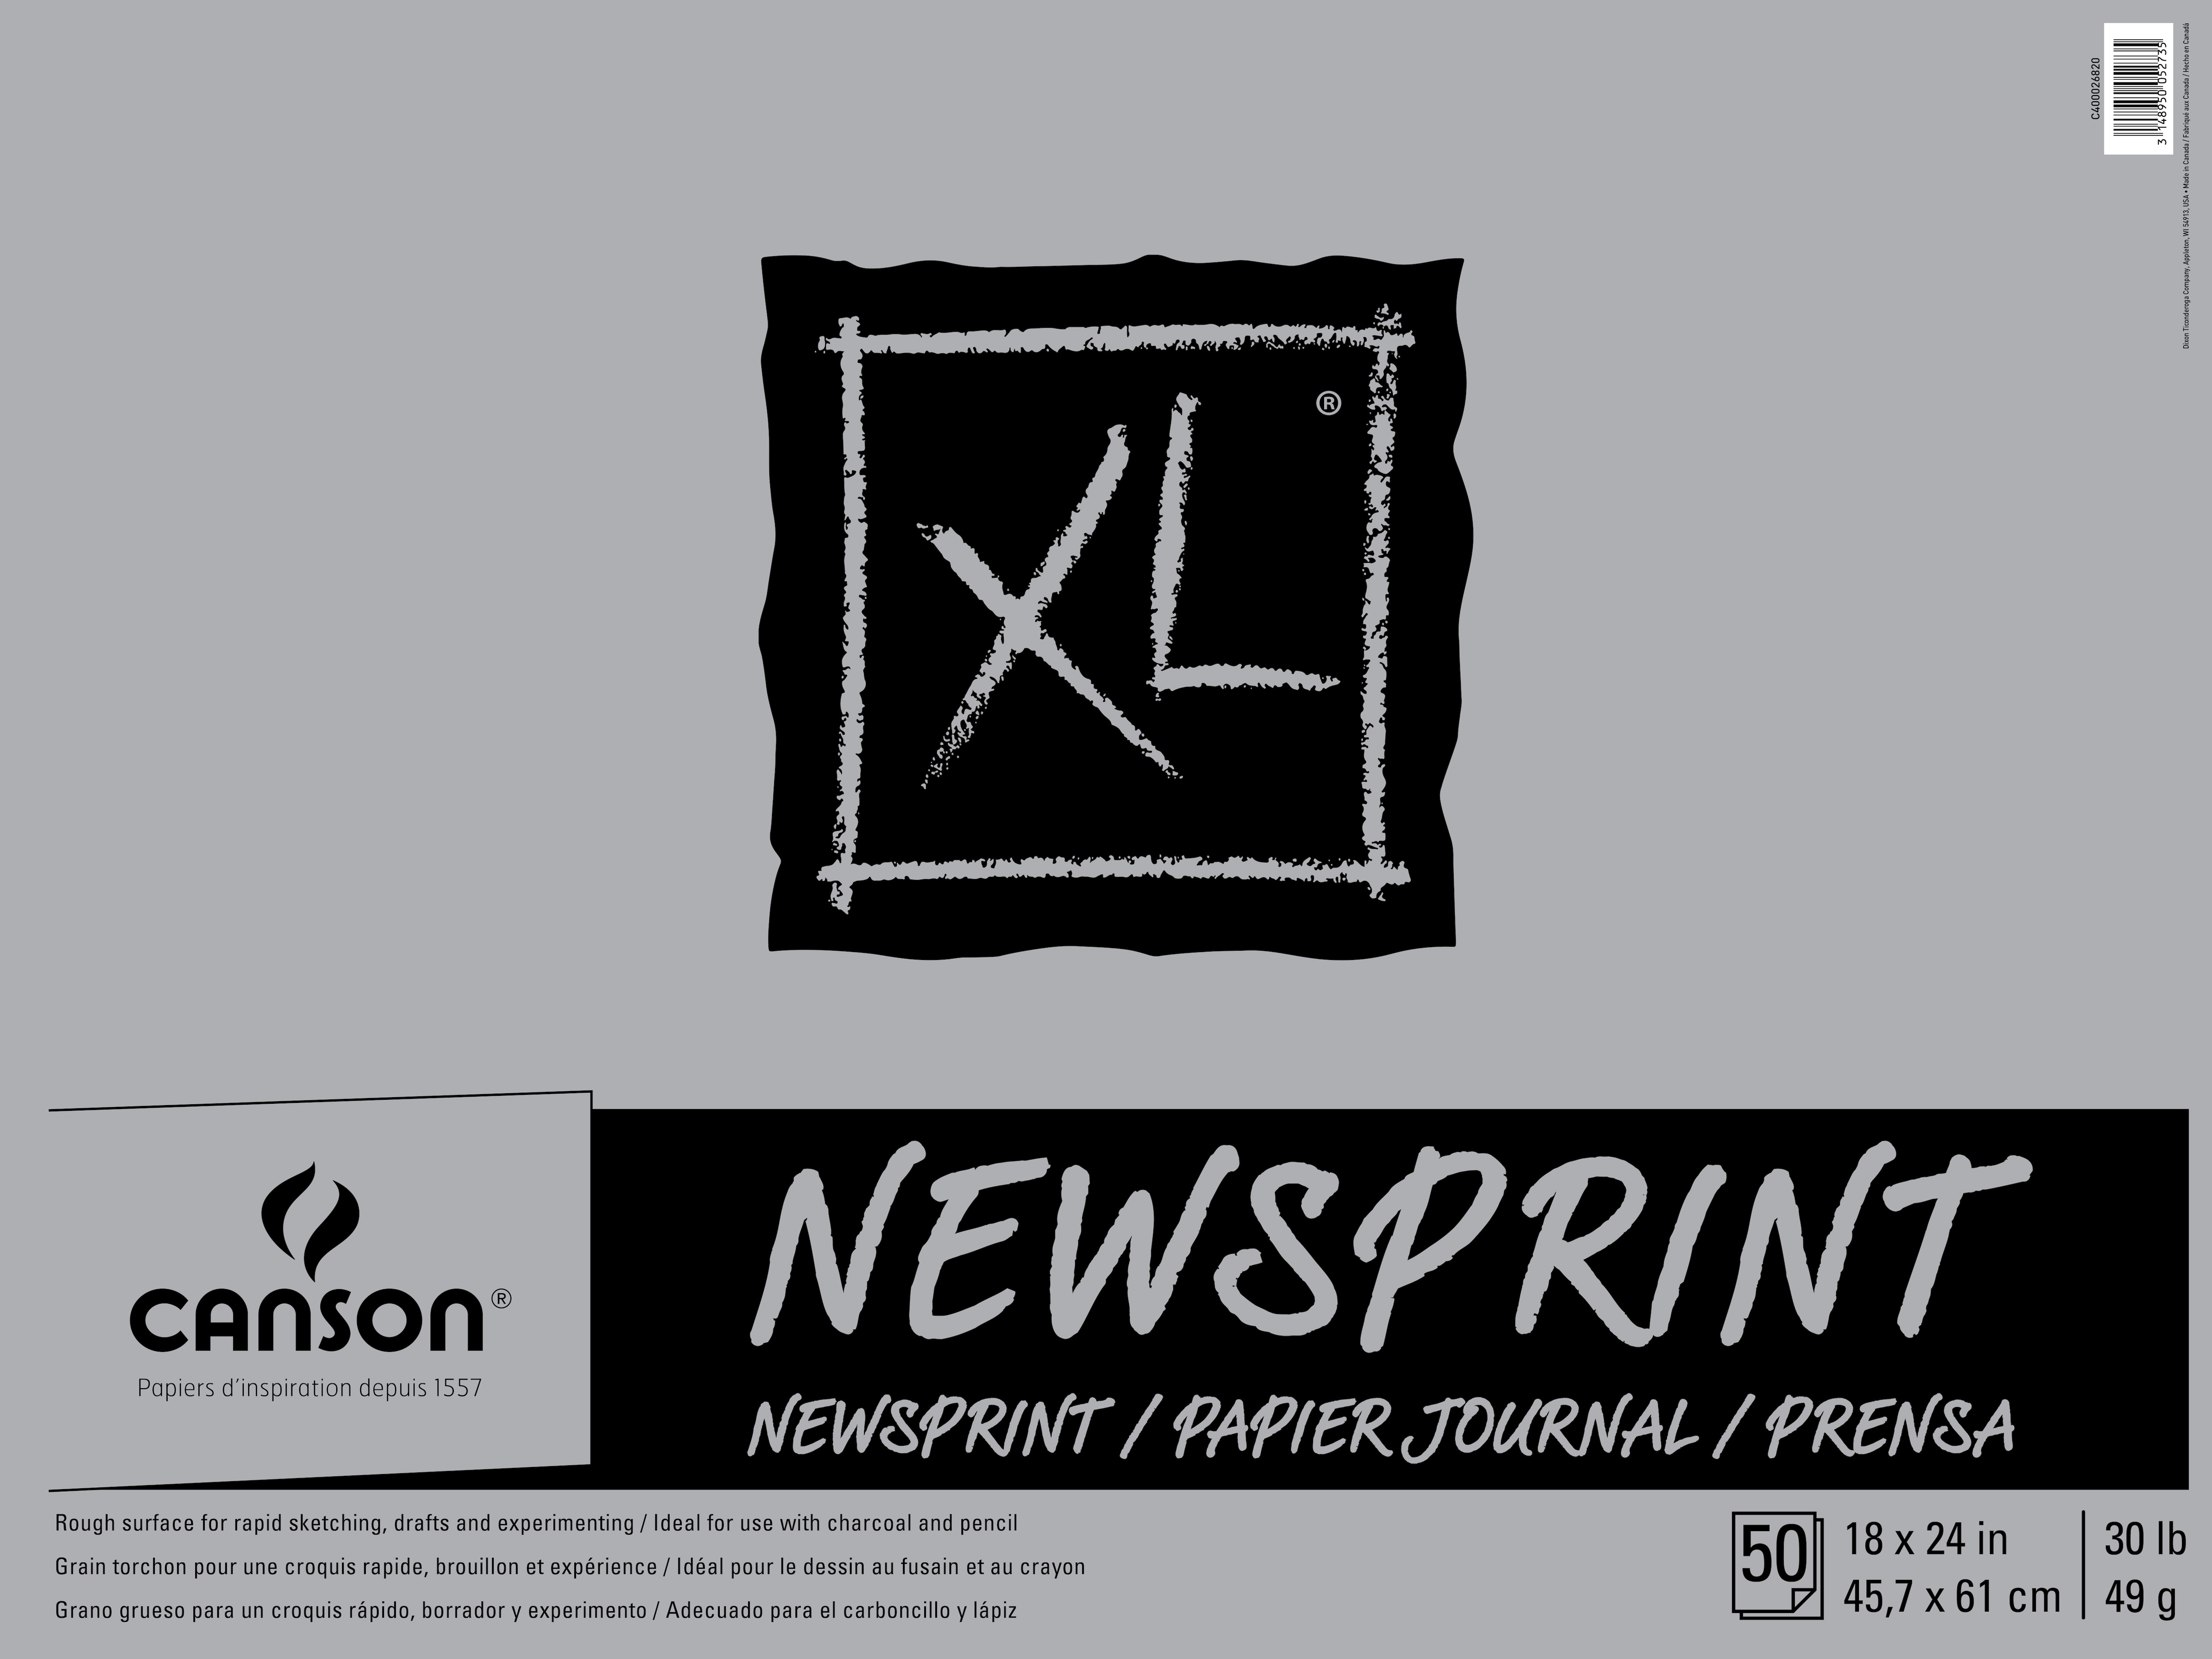 Canson XL Newsprint Paper Pad, 50 Sheets, 18" x 24"